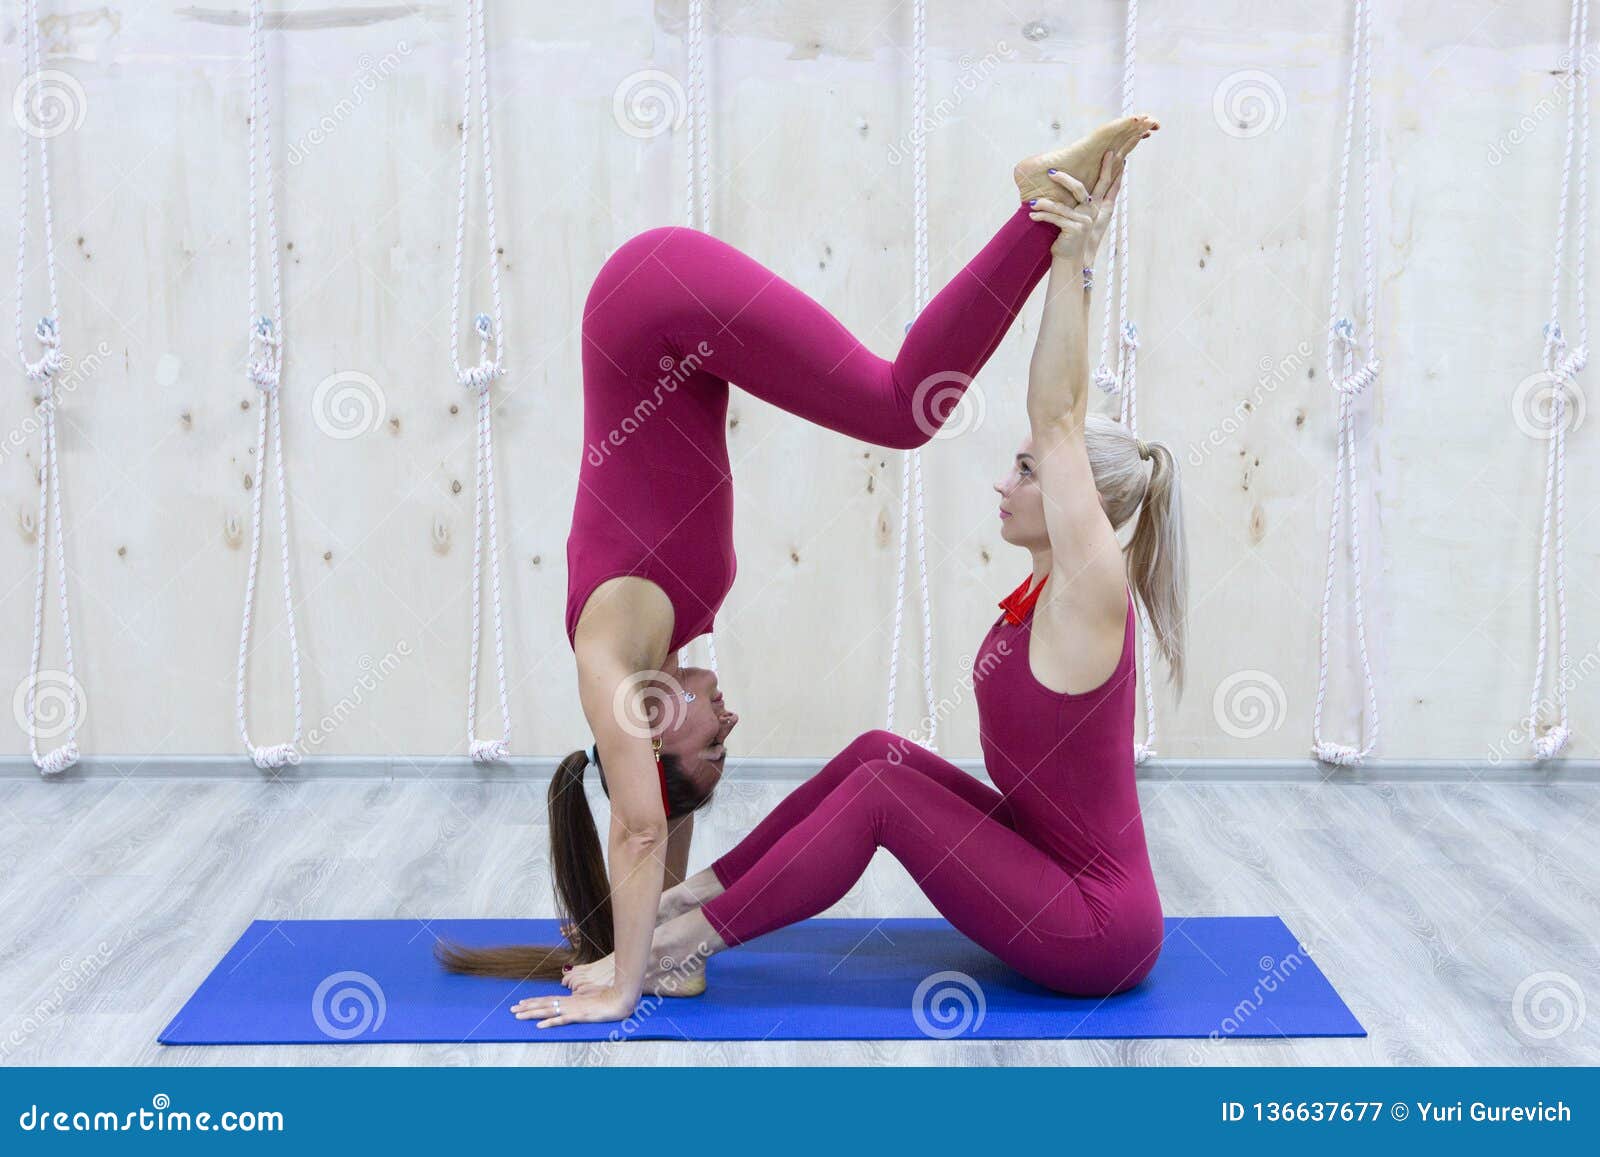 Yoga pose. gymnastics. bridge Stock Photo by ©seenaad 121427392